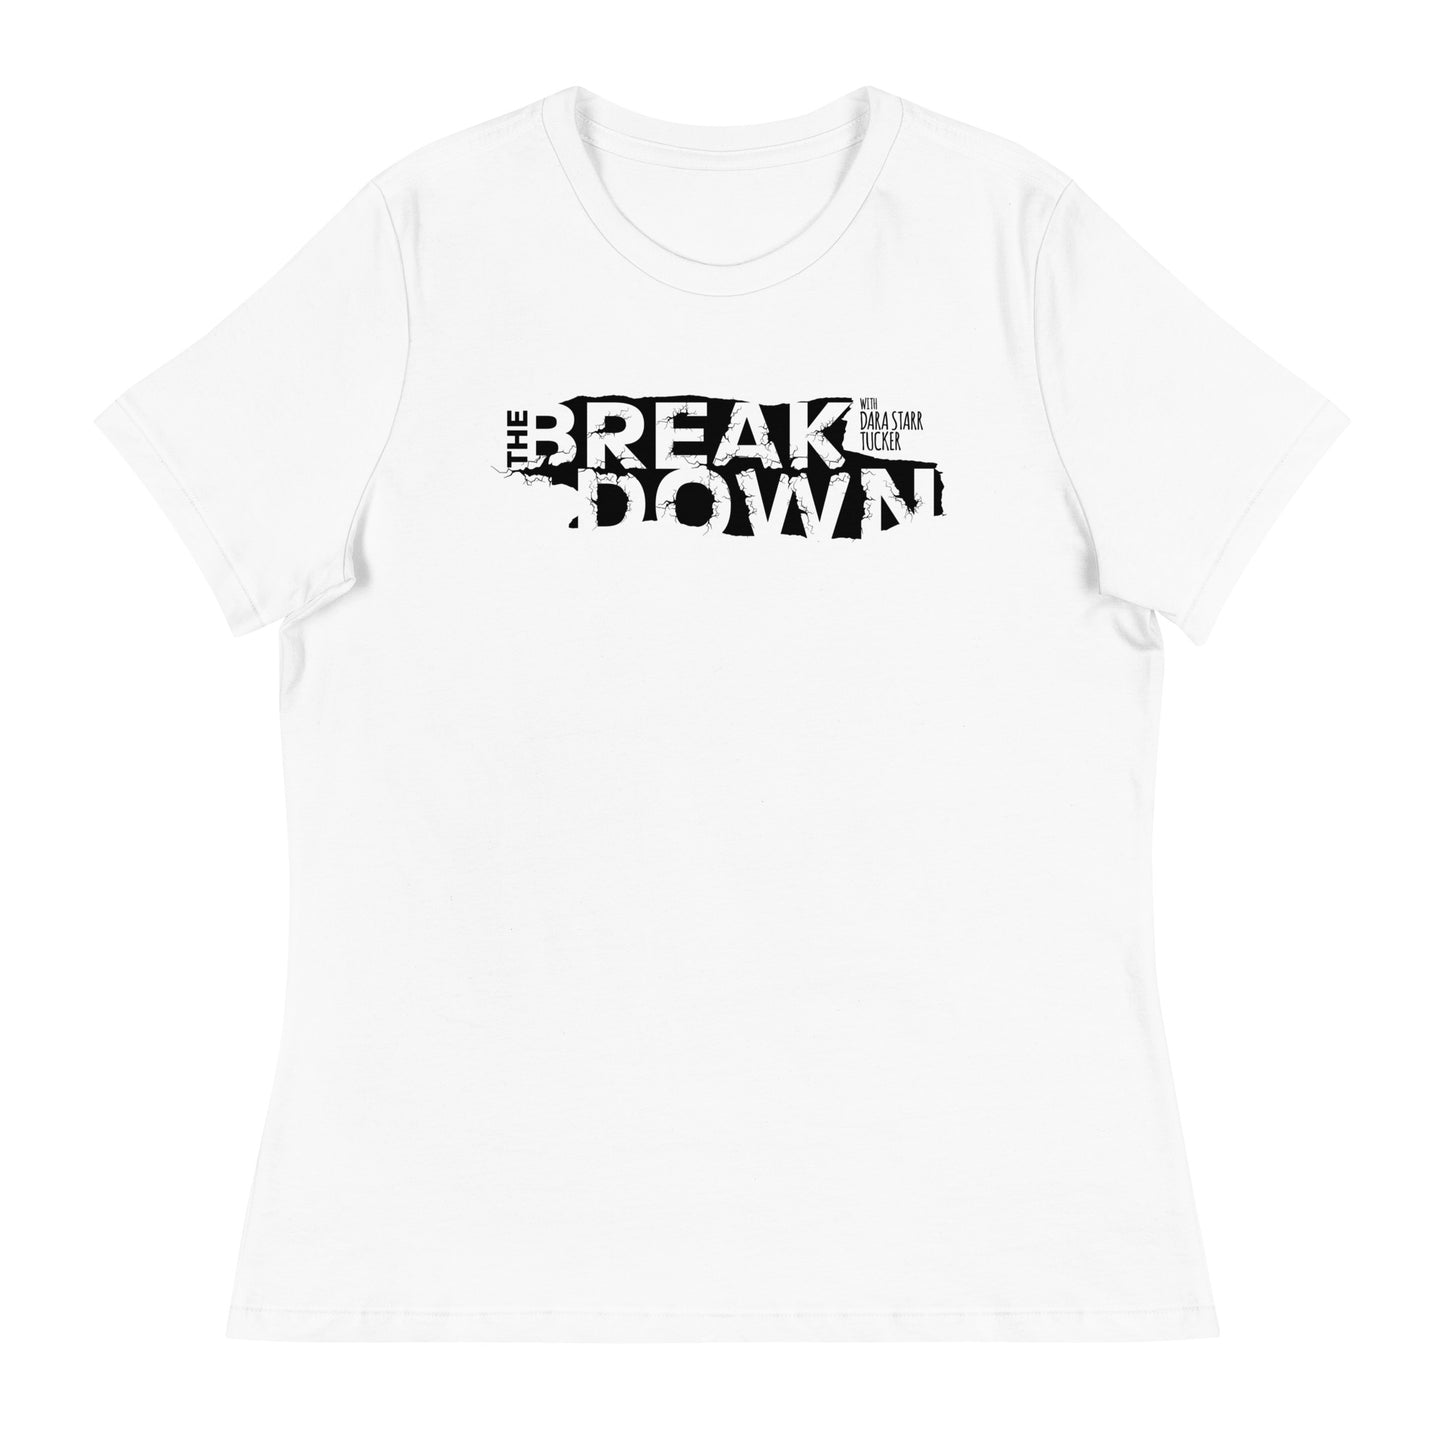 'The Breakdown' Women's Shirt - White/Gray